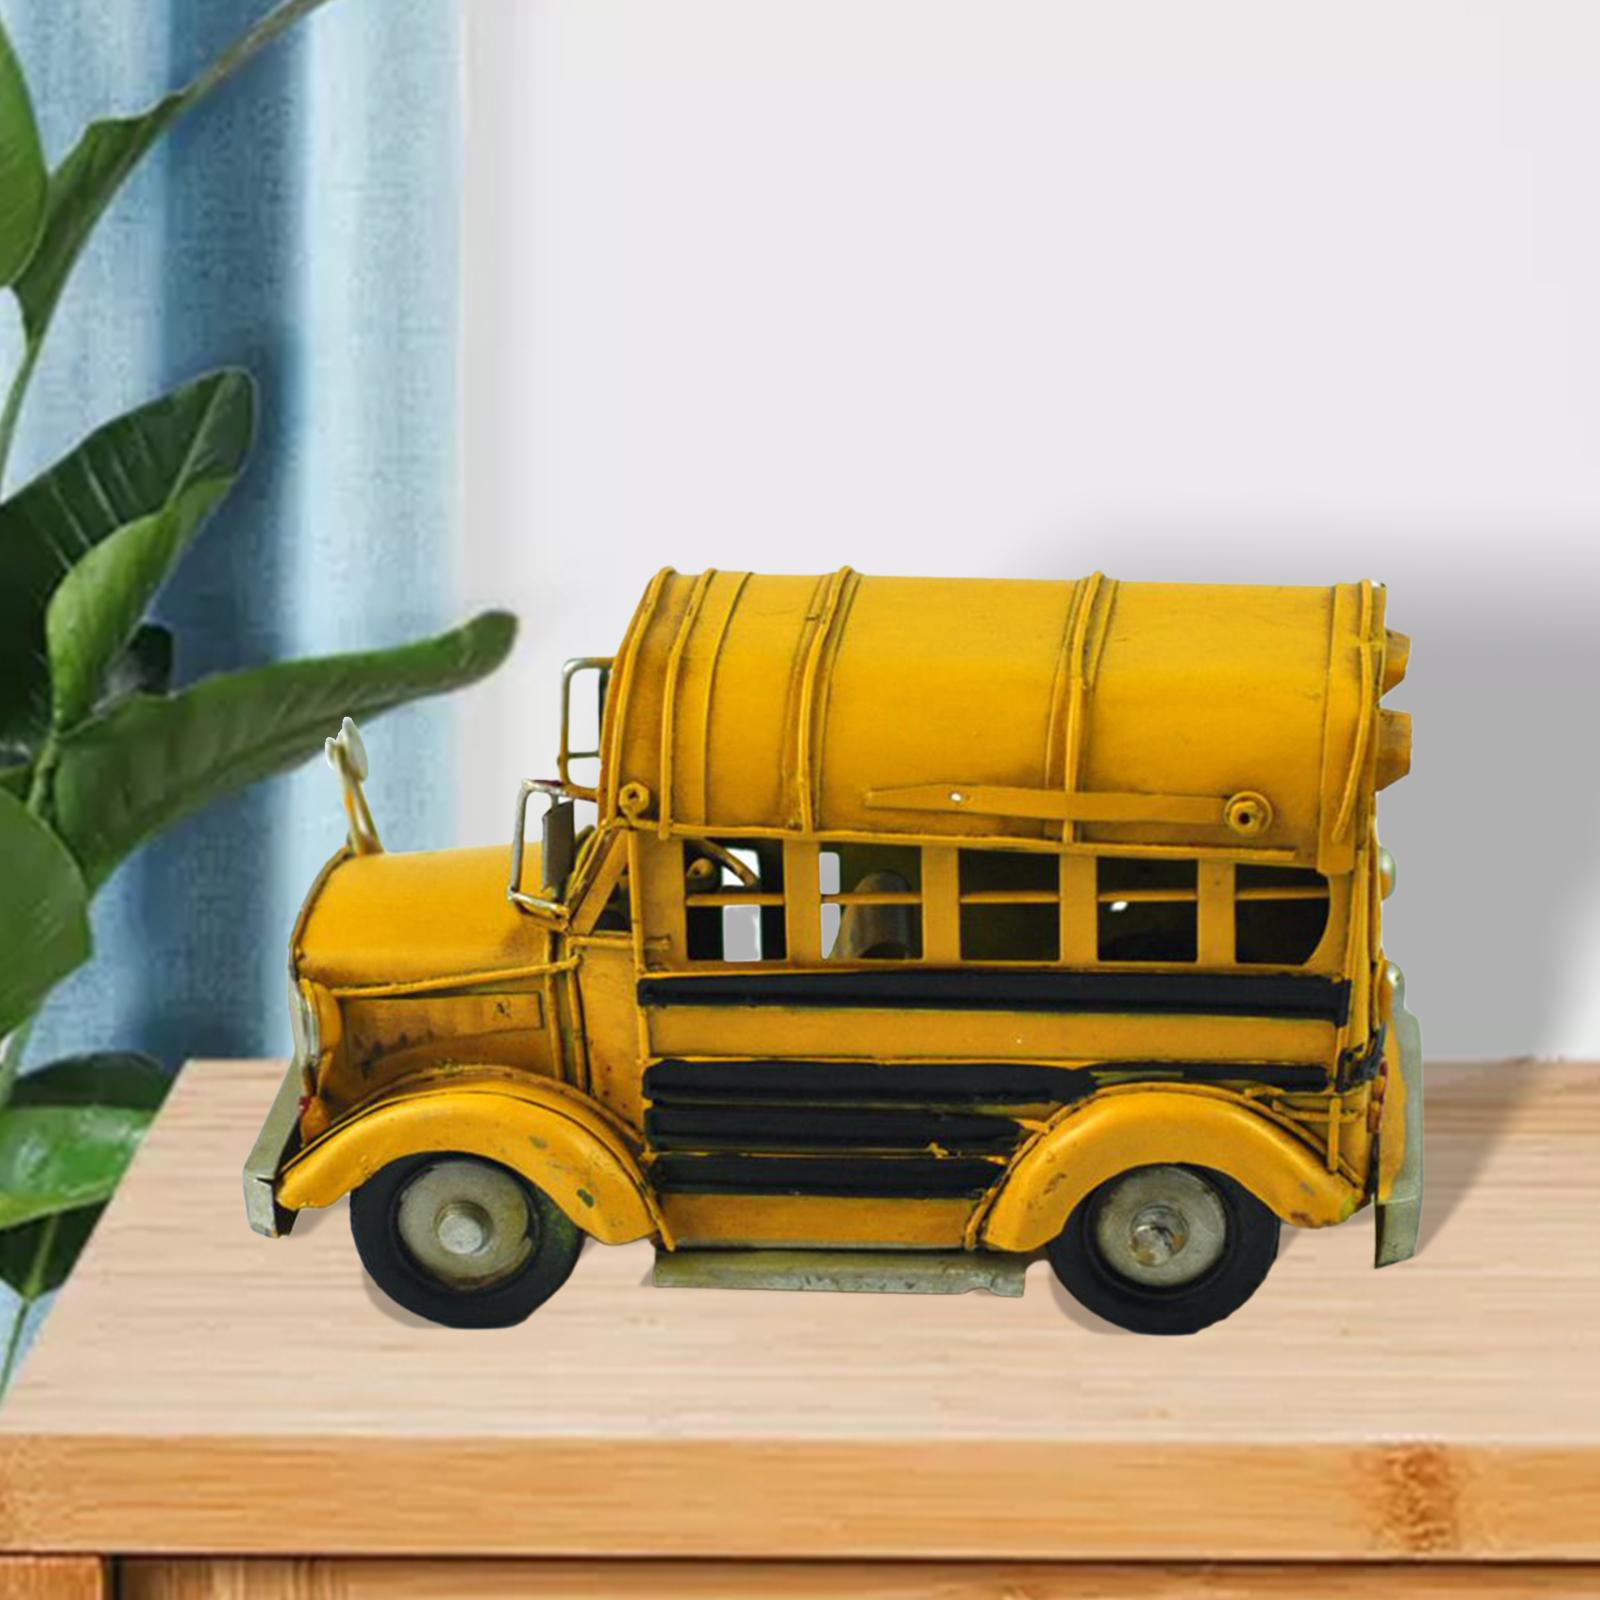 School Bus Toy Car Model Art Sculpture Crafts for Shelf Home Decor Kids Gift